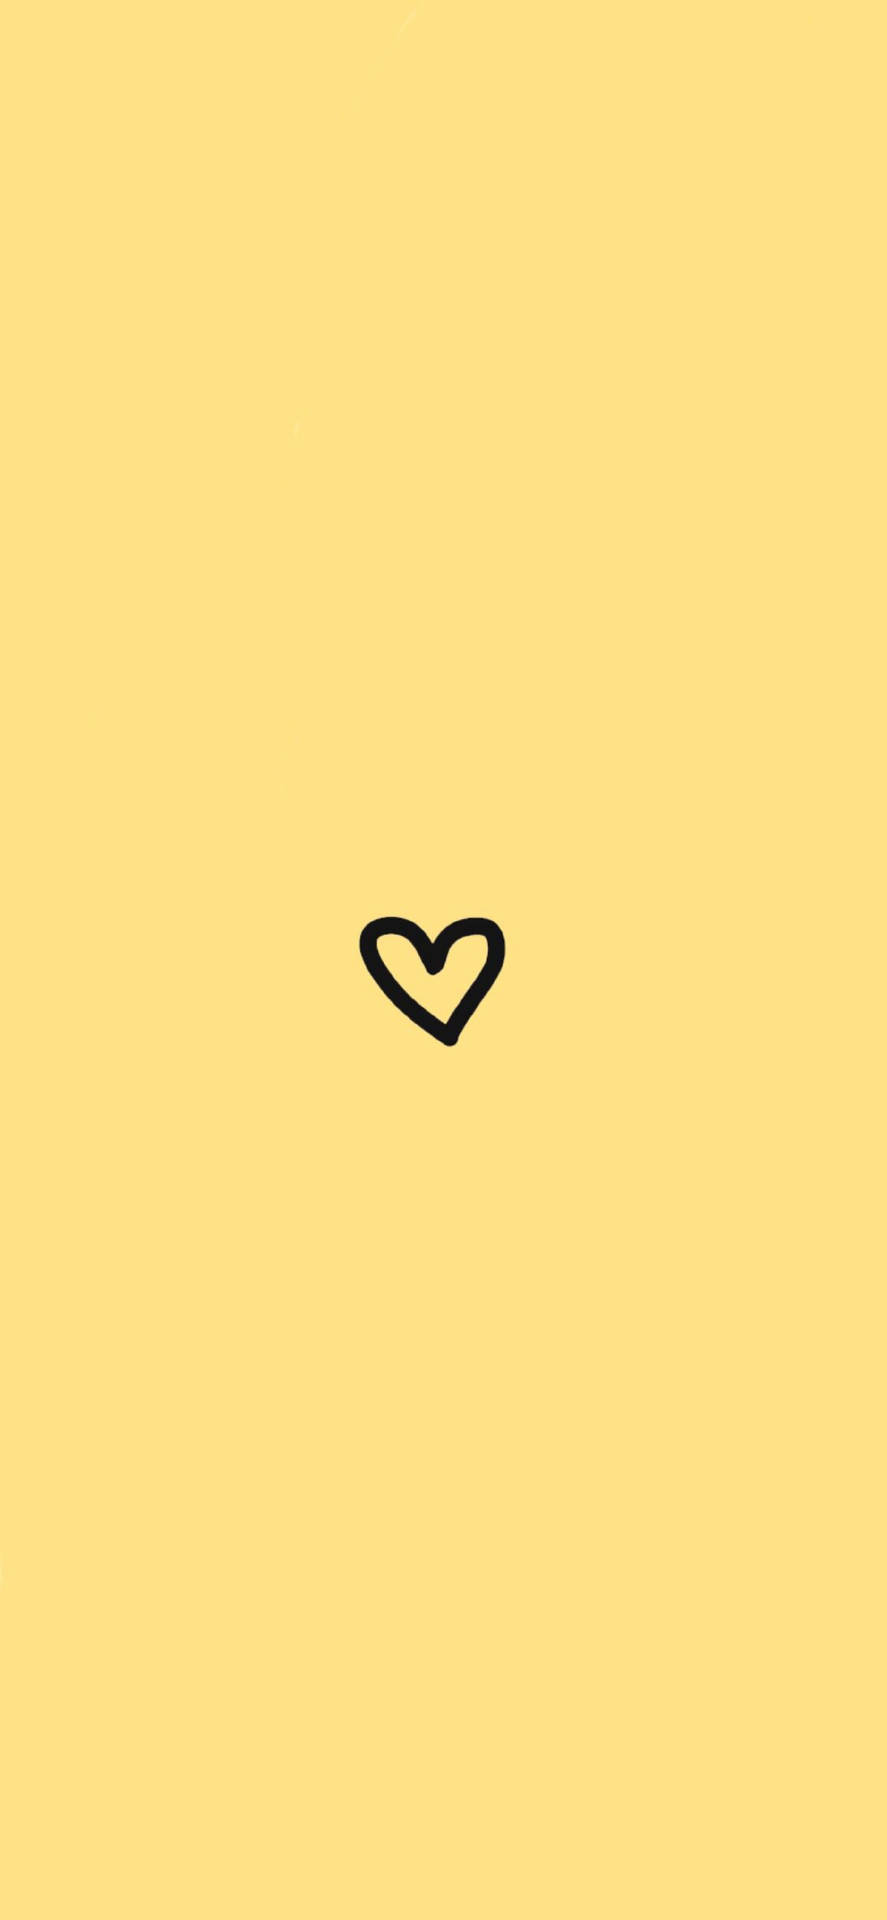 Minimalist Heart Yellow Instagram Profile Wallpaper